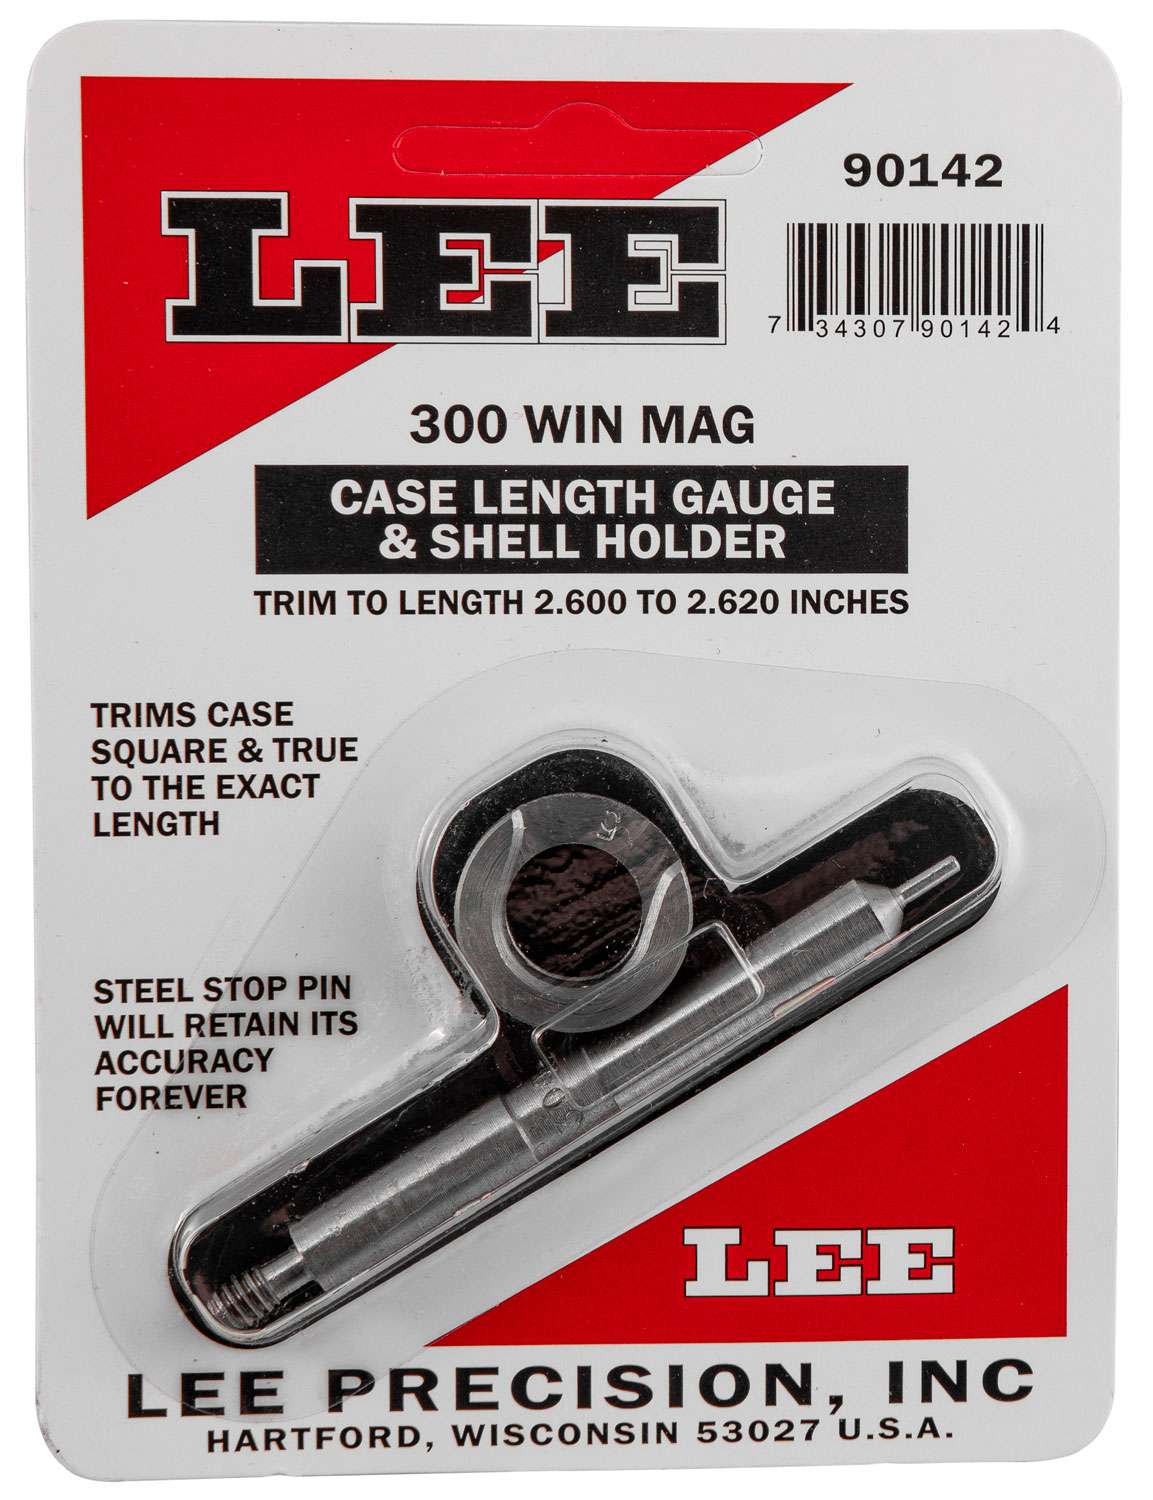 NEW Lee Case Length Gauge and Shellholder 300 Win Mag 90142 